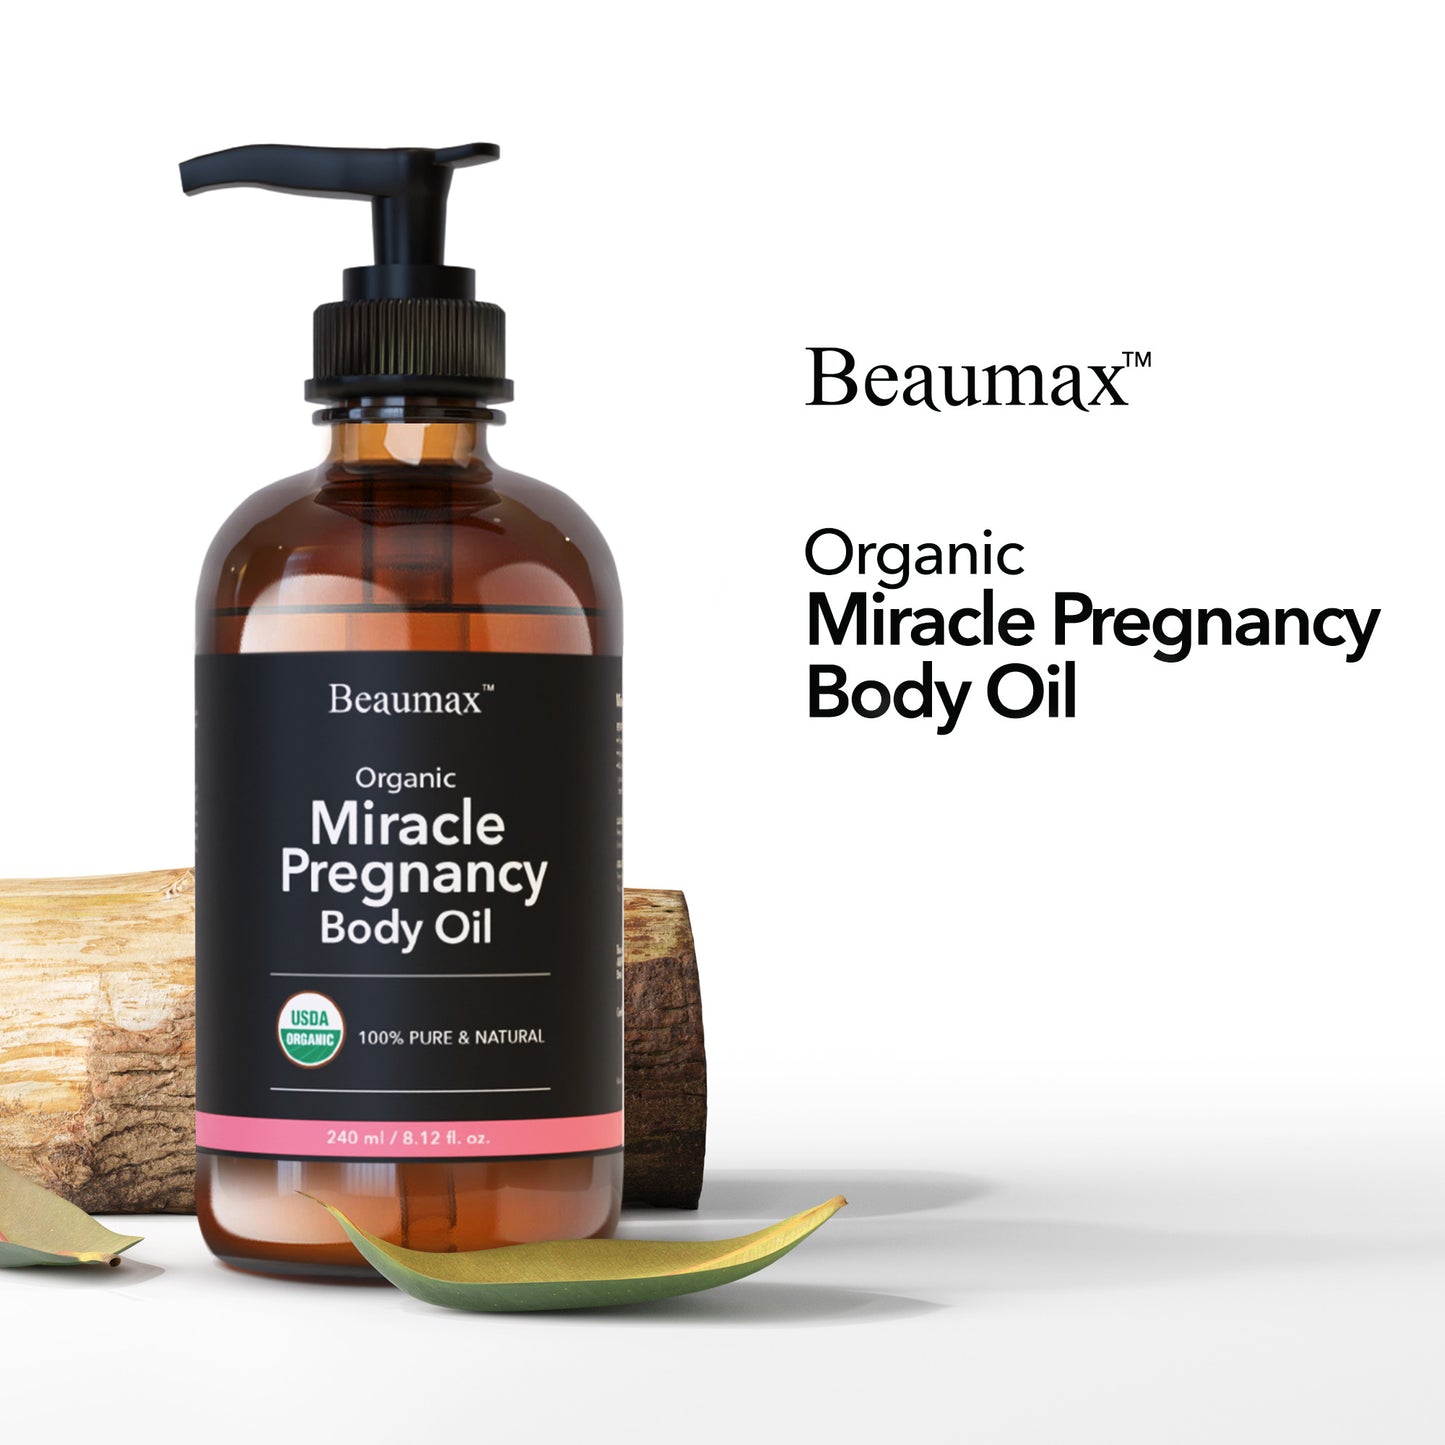 Organic Miracle Pregnancy Body Oil 240ml / 8.12fl.oz.